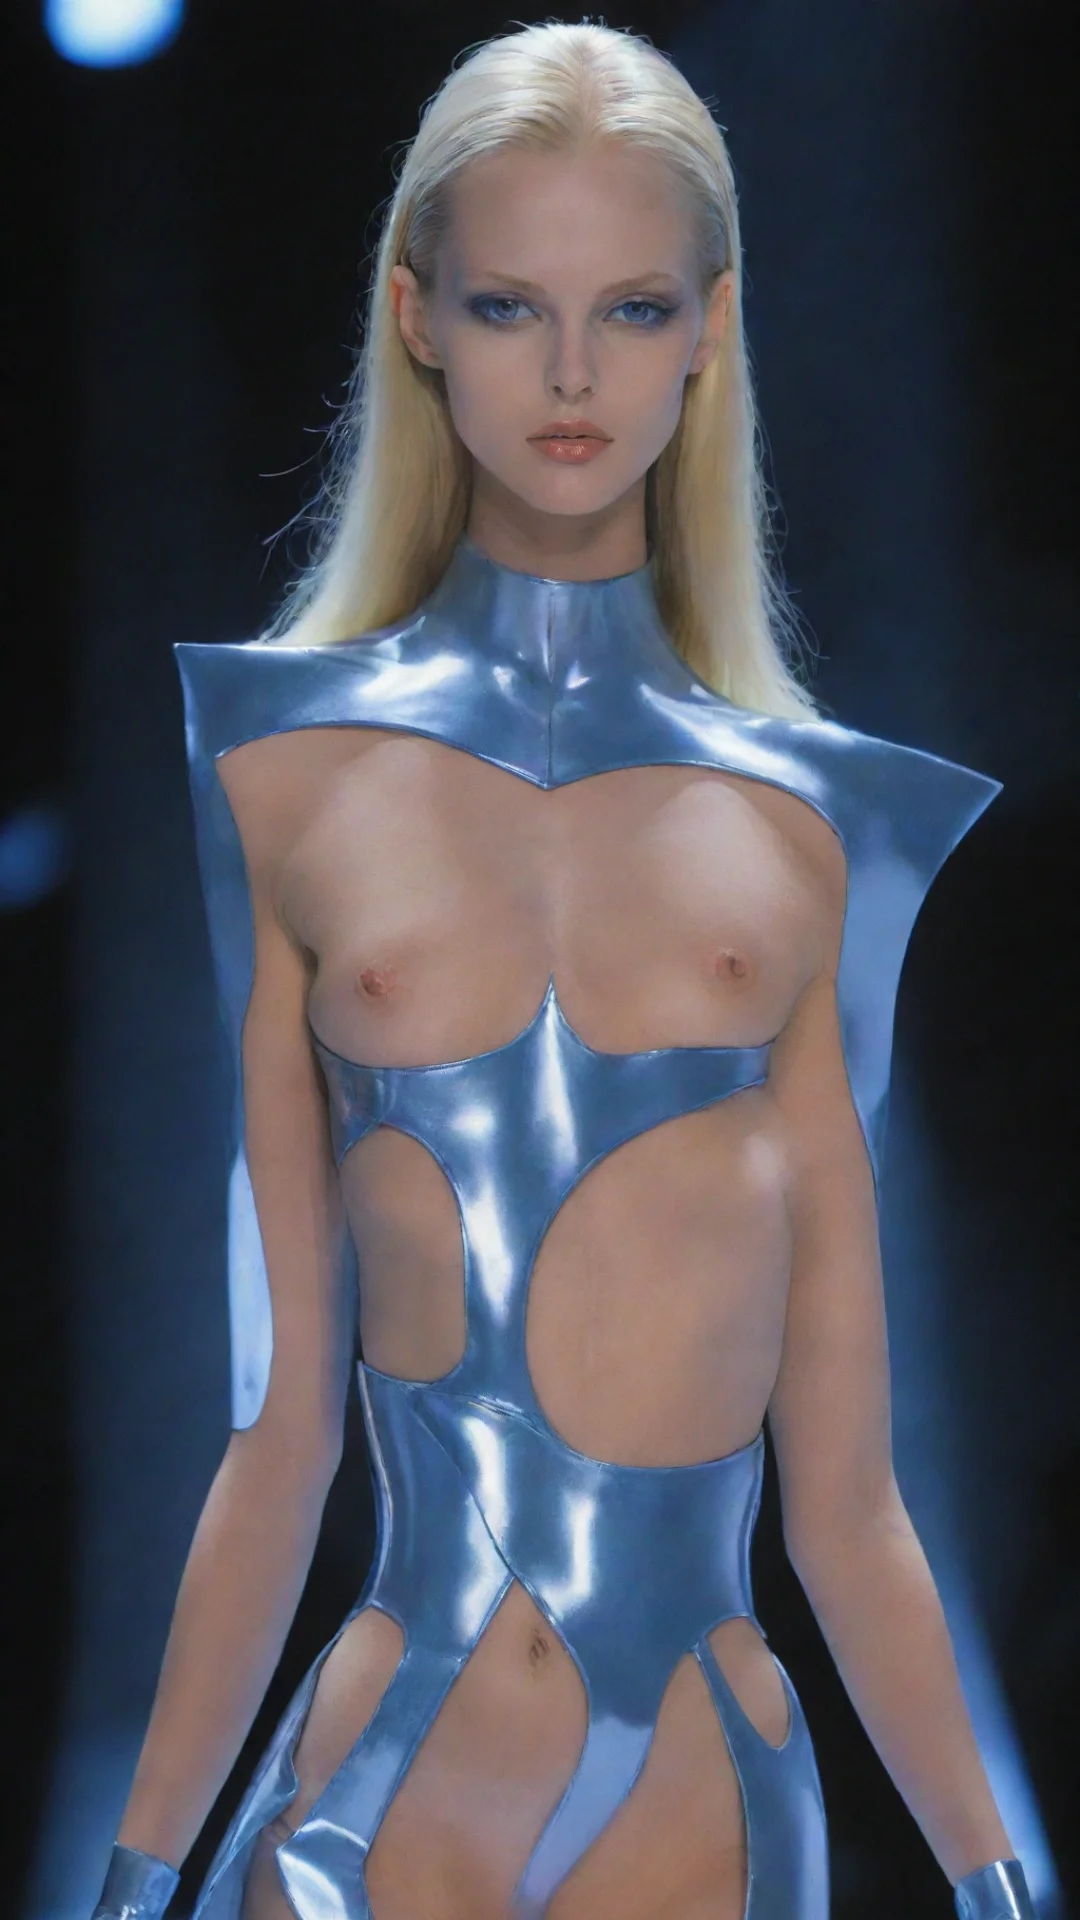 amazing thierry mugler futuristic fashion on model awesome portrait 2 tall